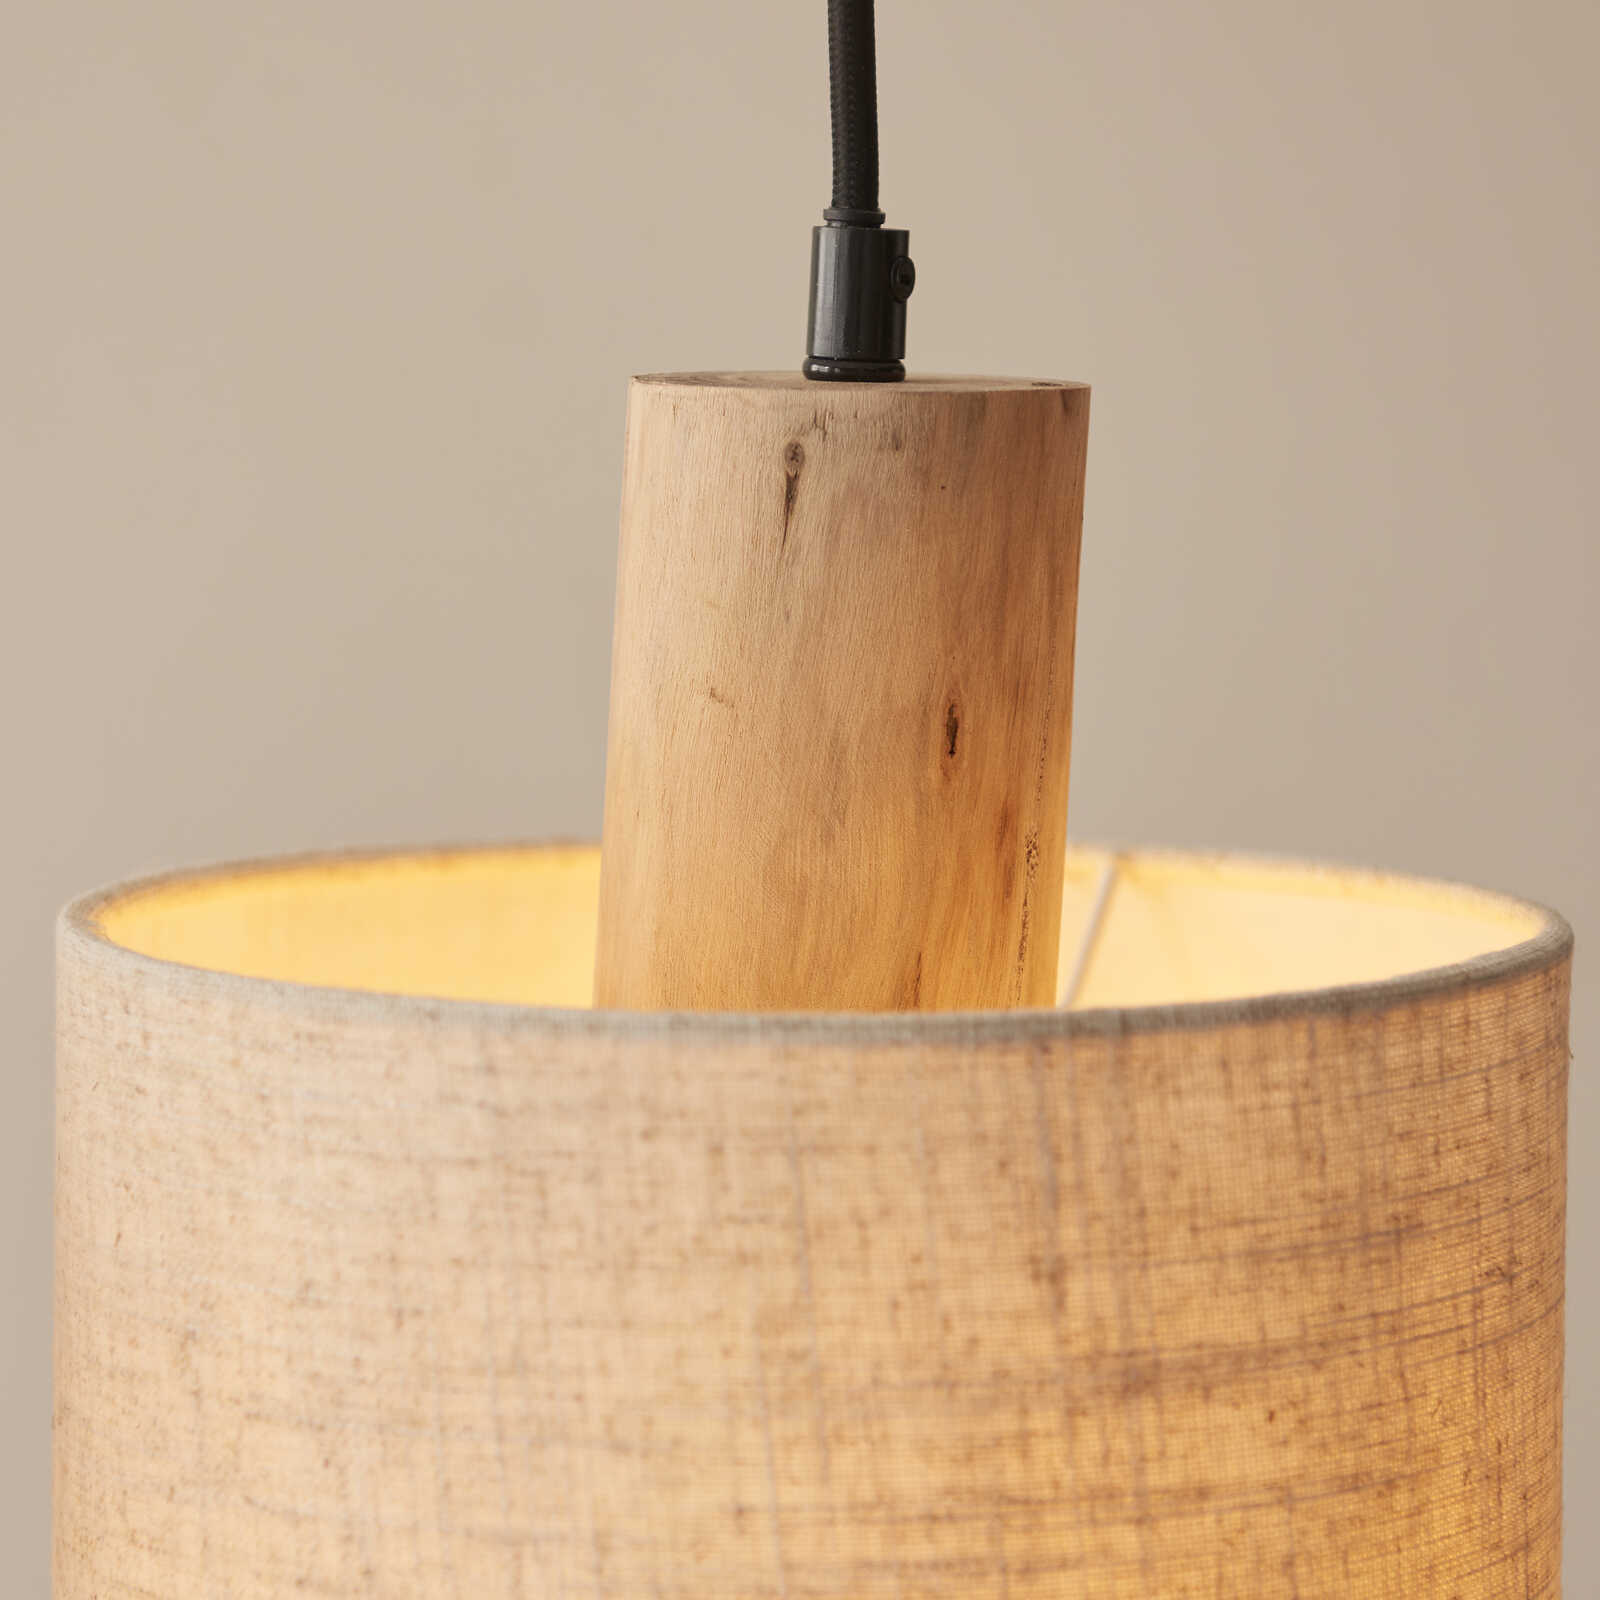             Wooden pendant light - Manuel - Brown
        